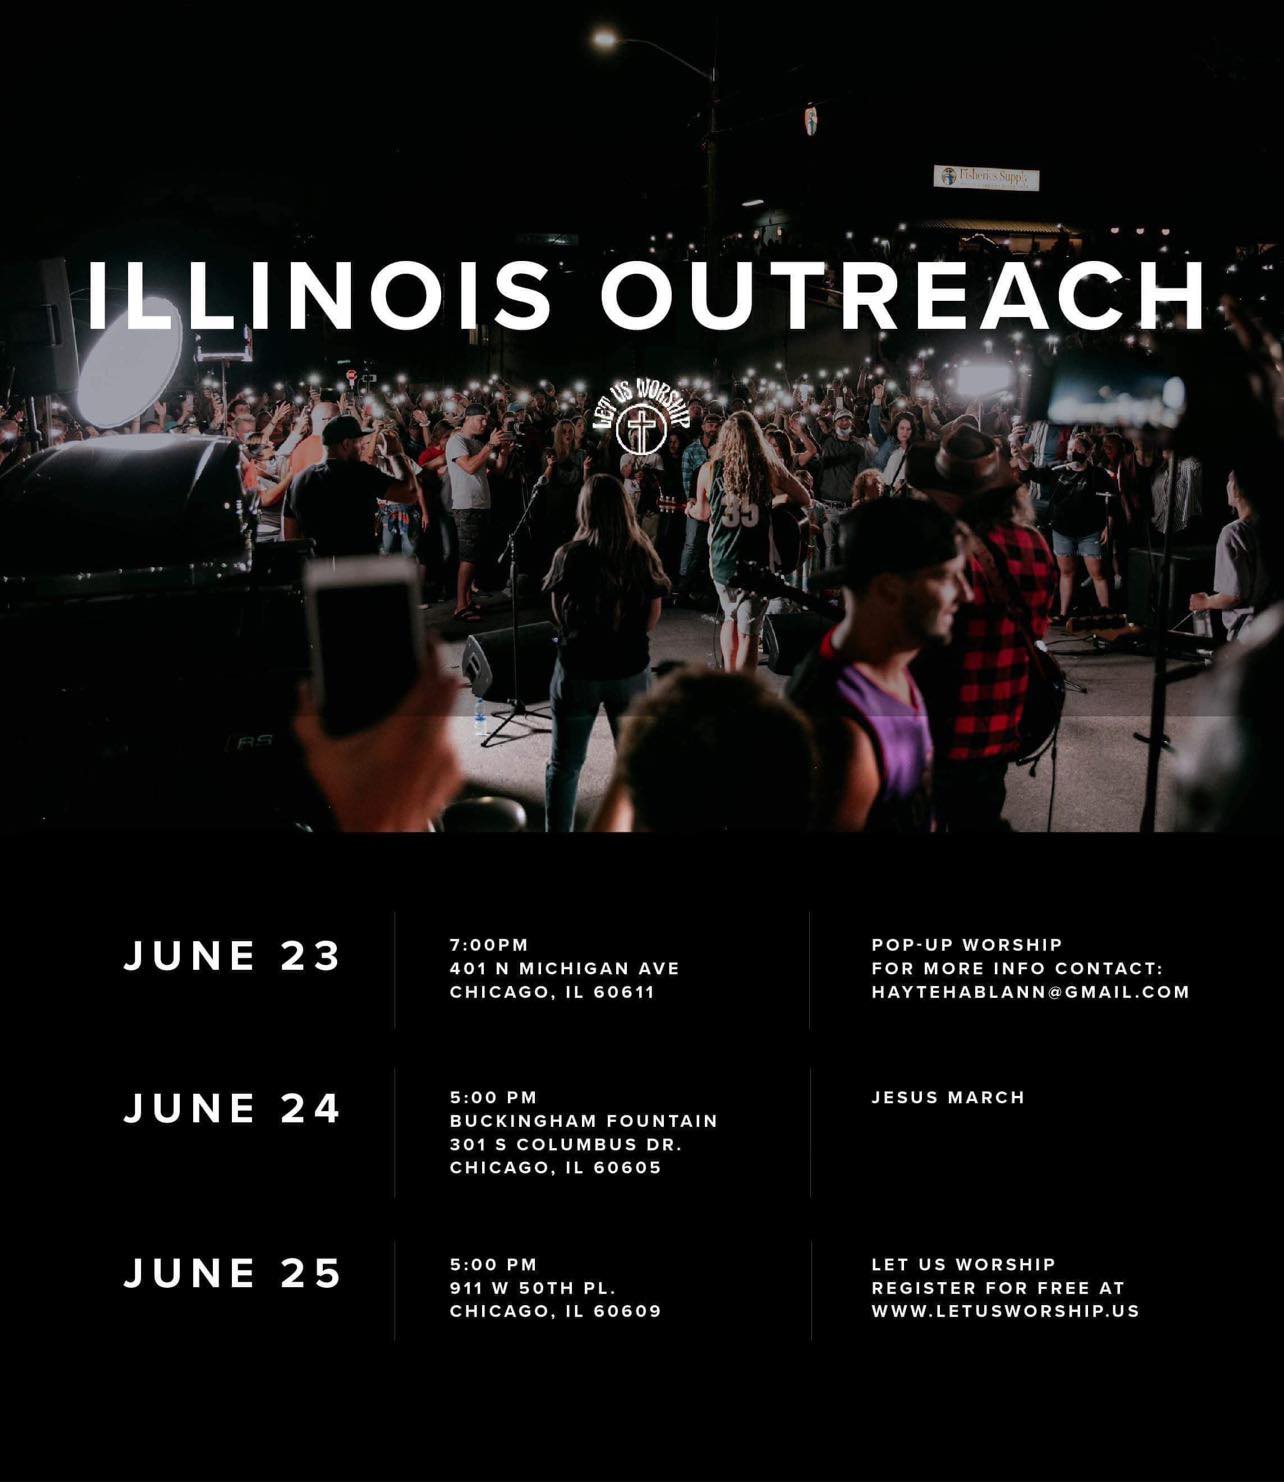 Illinois Outreach Let Us Worship - Chicago